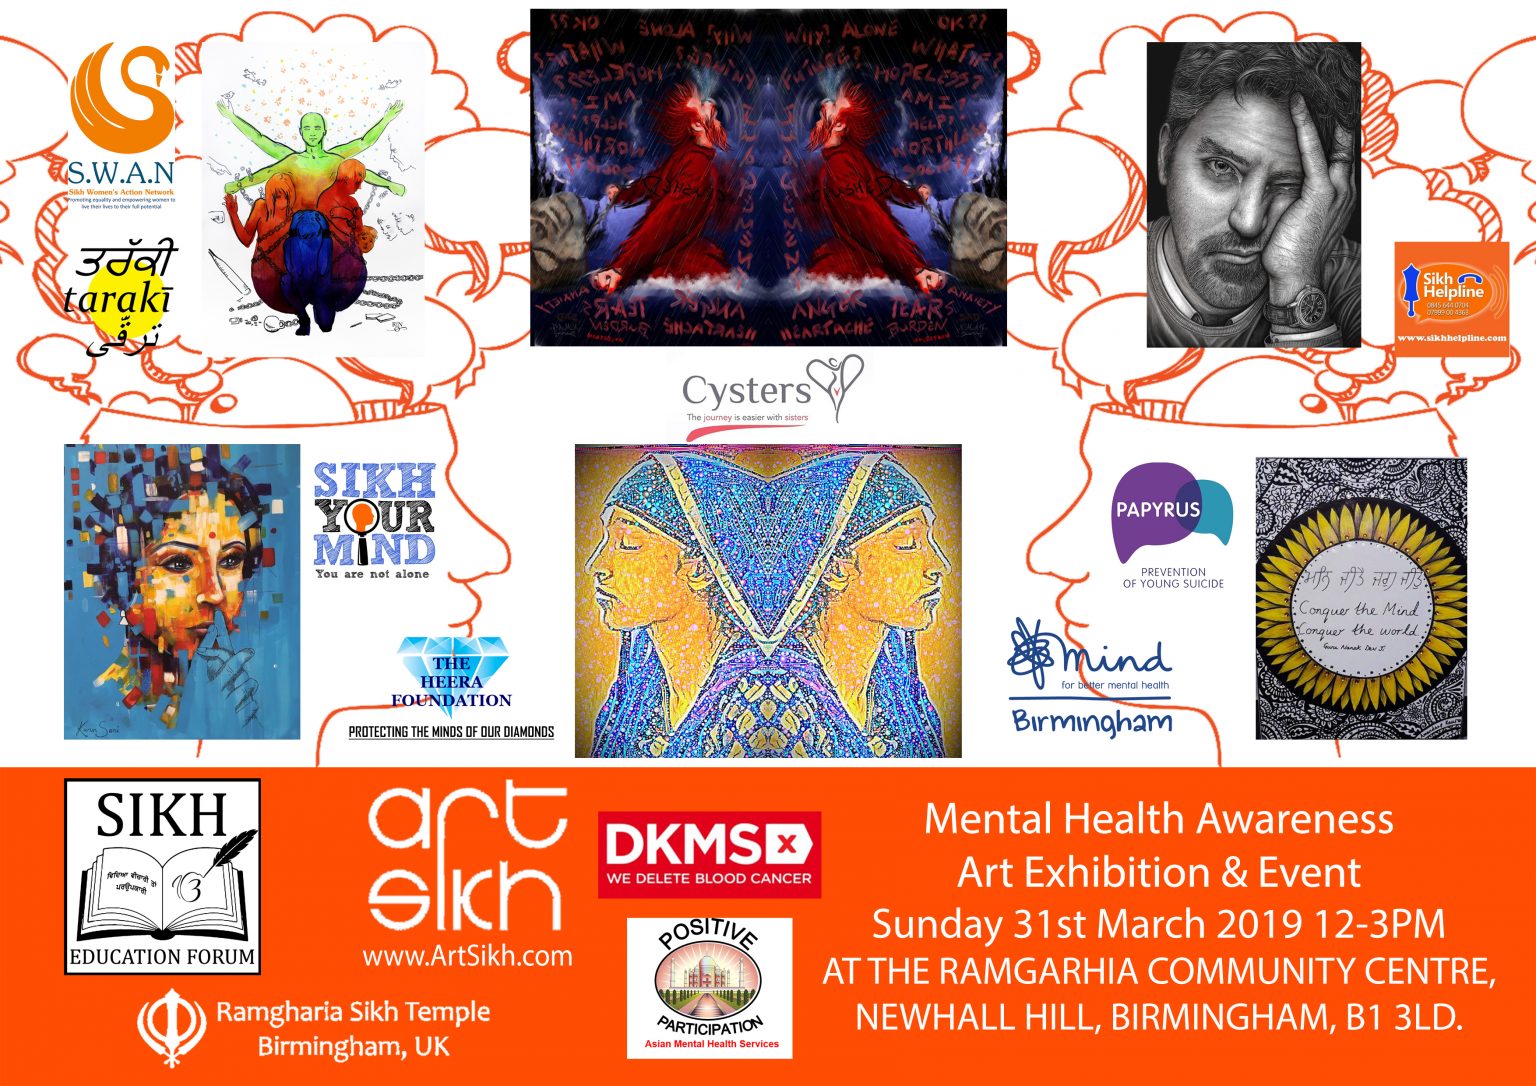 Mental Health Awareness Event & Art Exhibition 31.03.2019 – Art Sikh